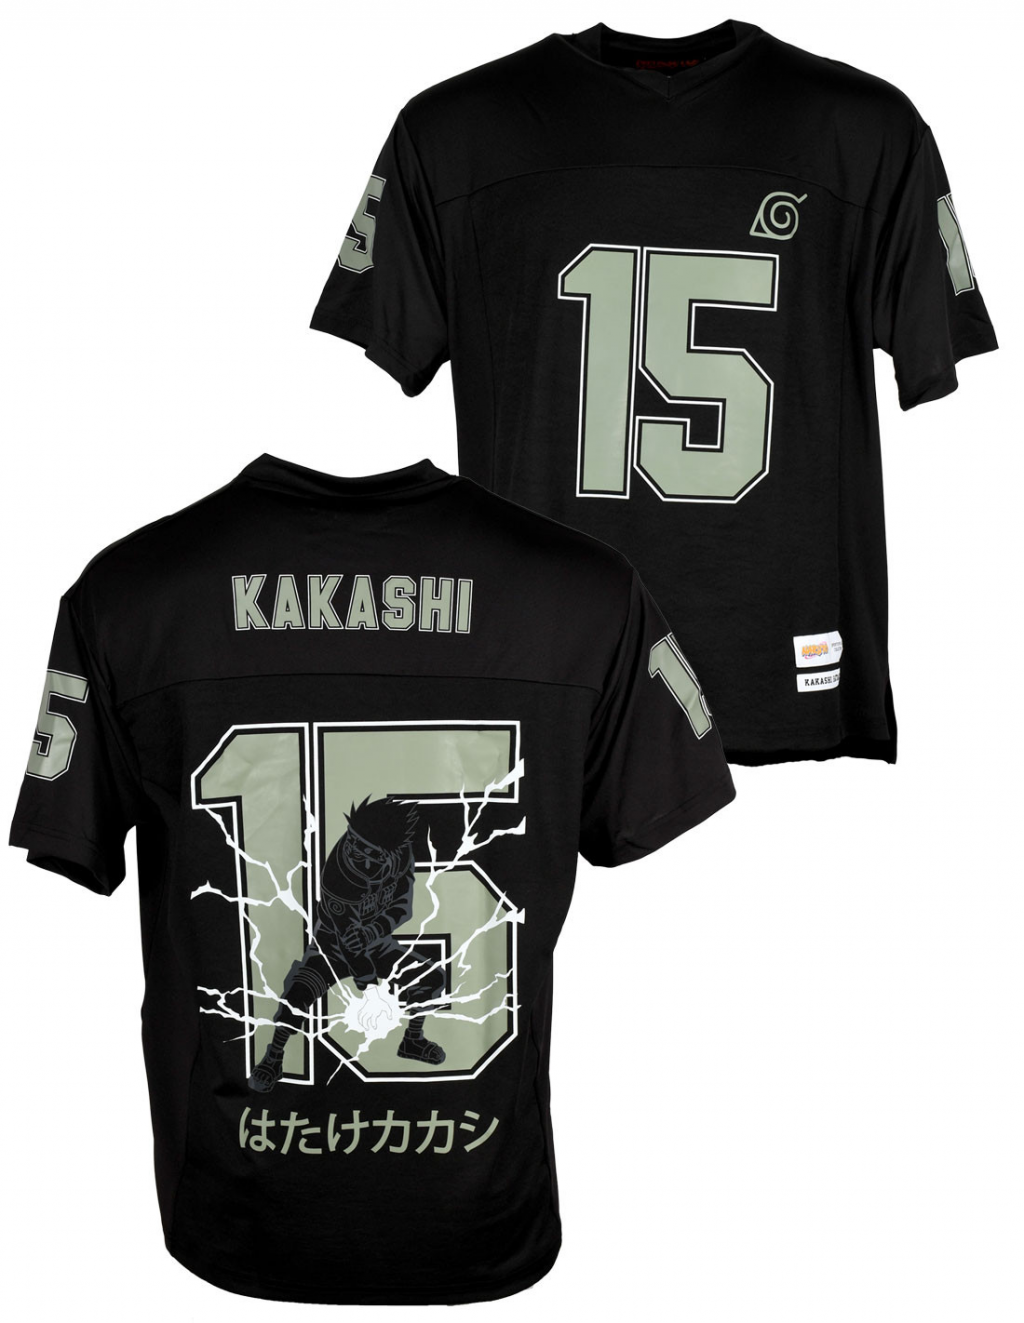 NARUTO - Kakashi - T-Shirt Sports US Replica unisex (S)